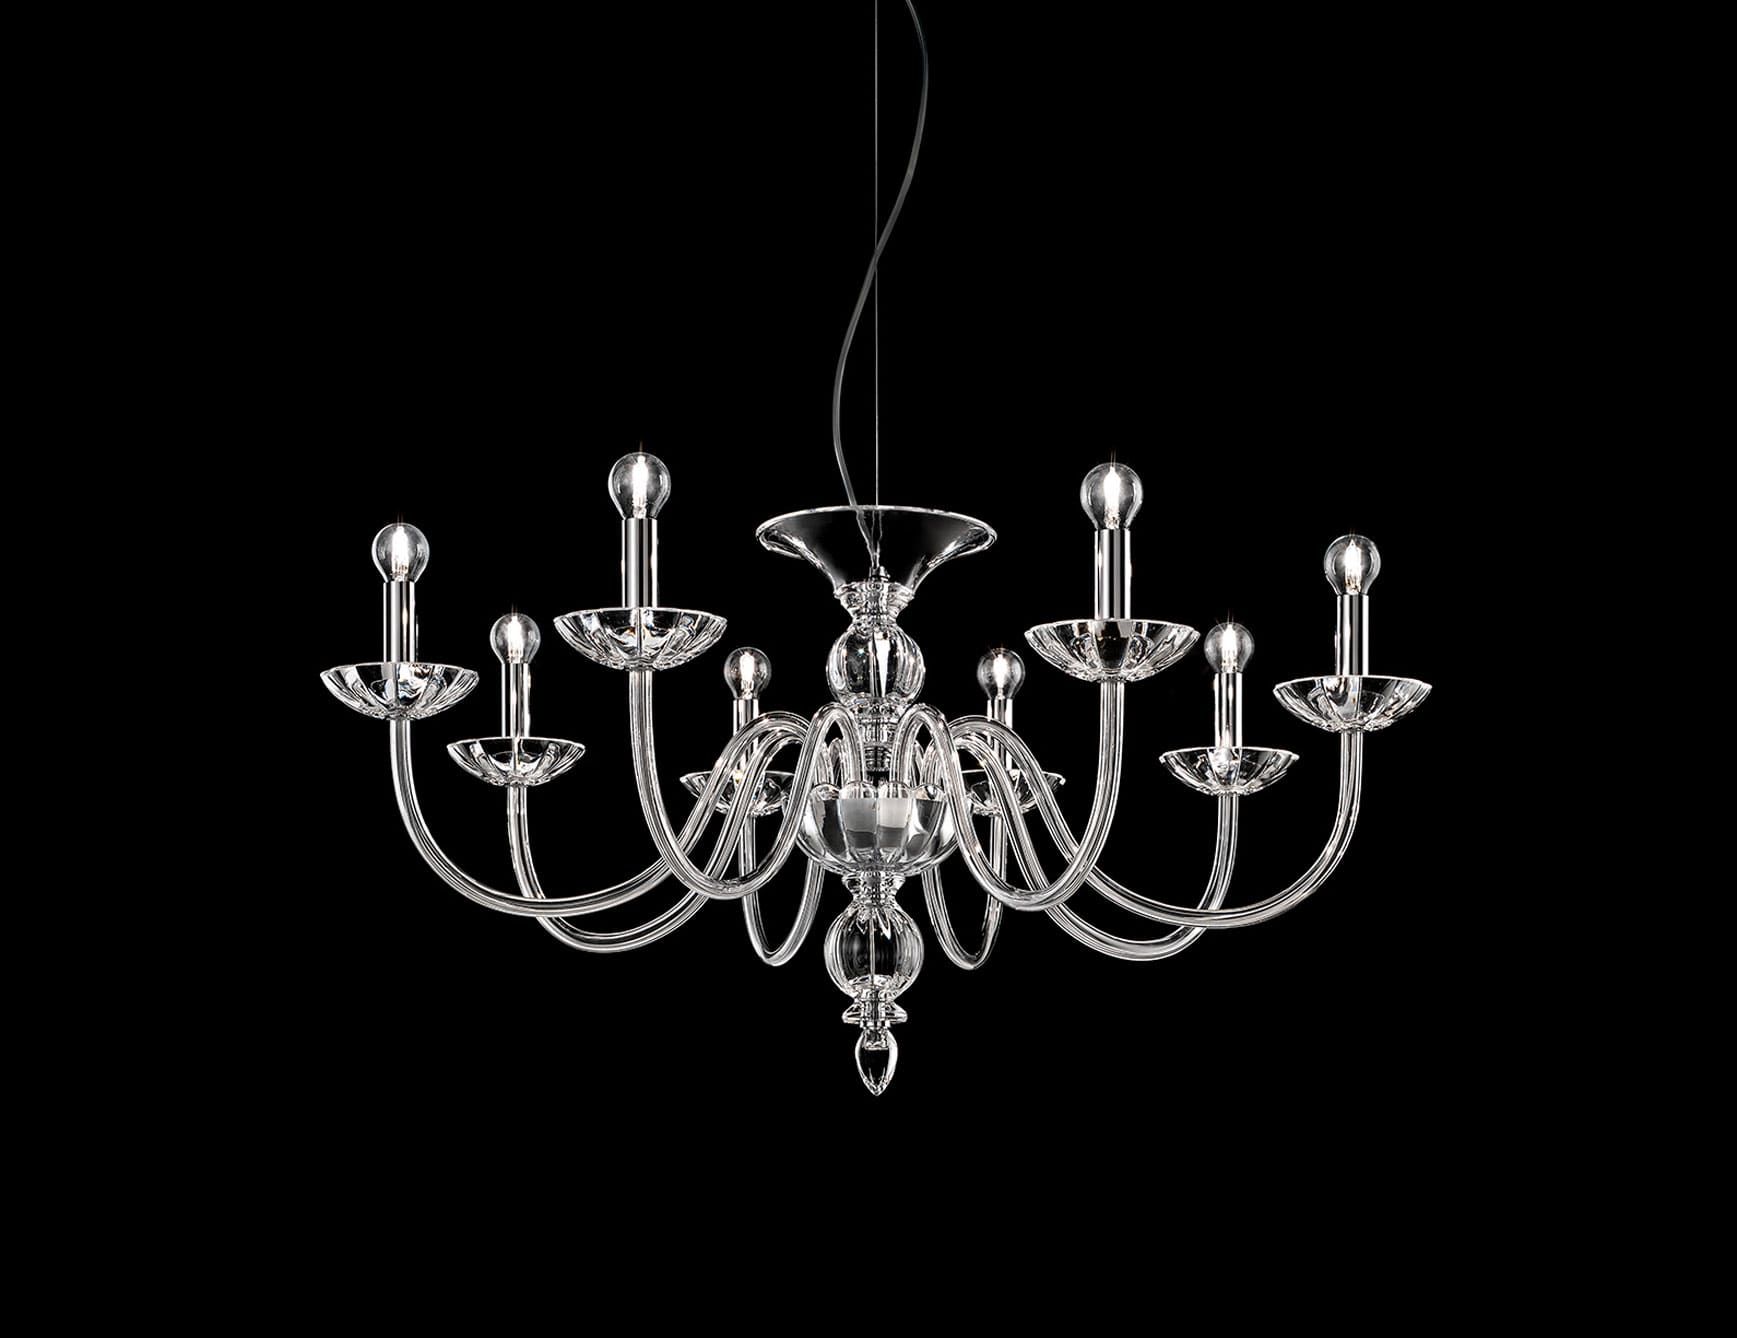 Sirius modern Italian chandelier with clear glass